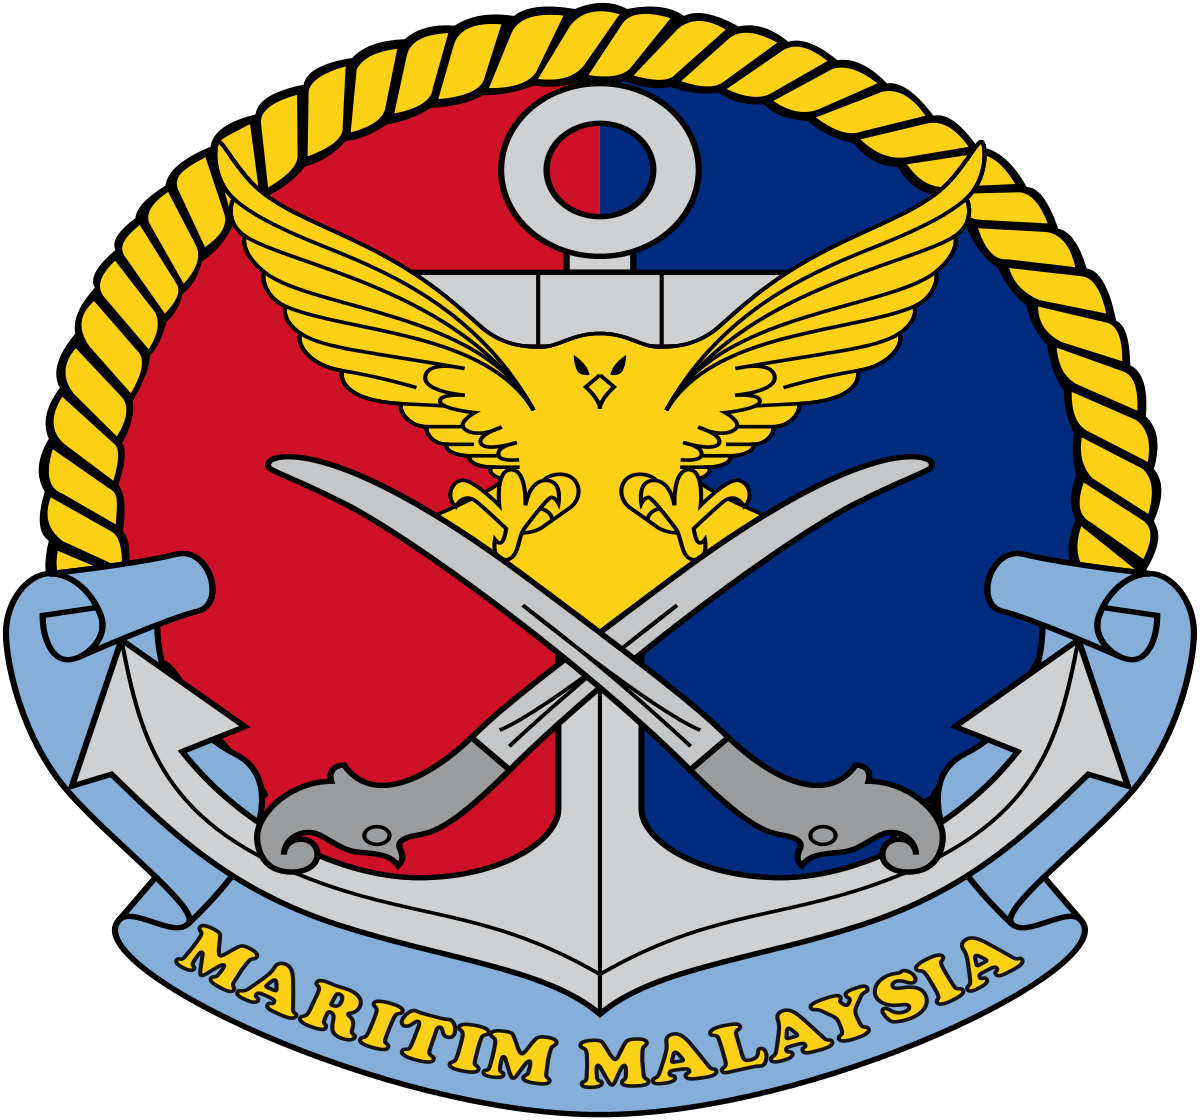 Agensi Penguatkuasaan Maritim Malaysia